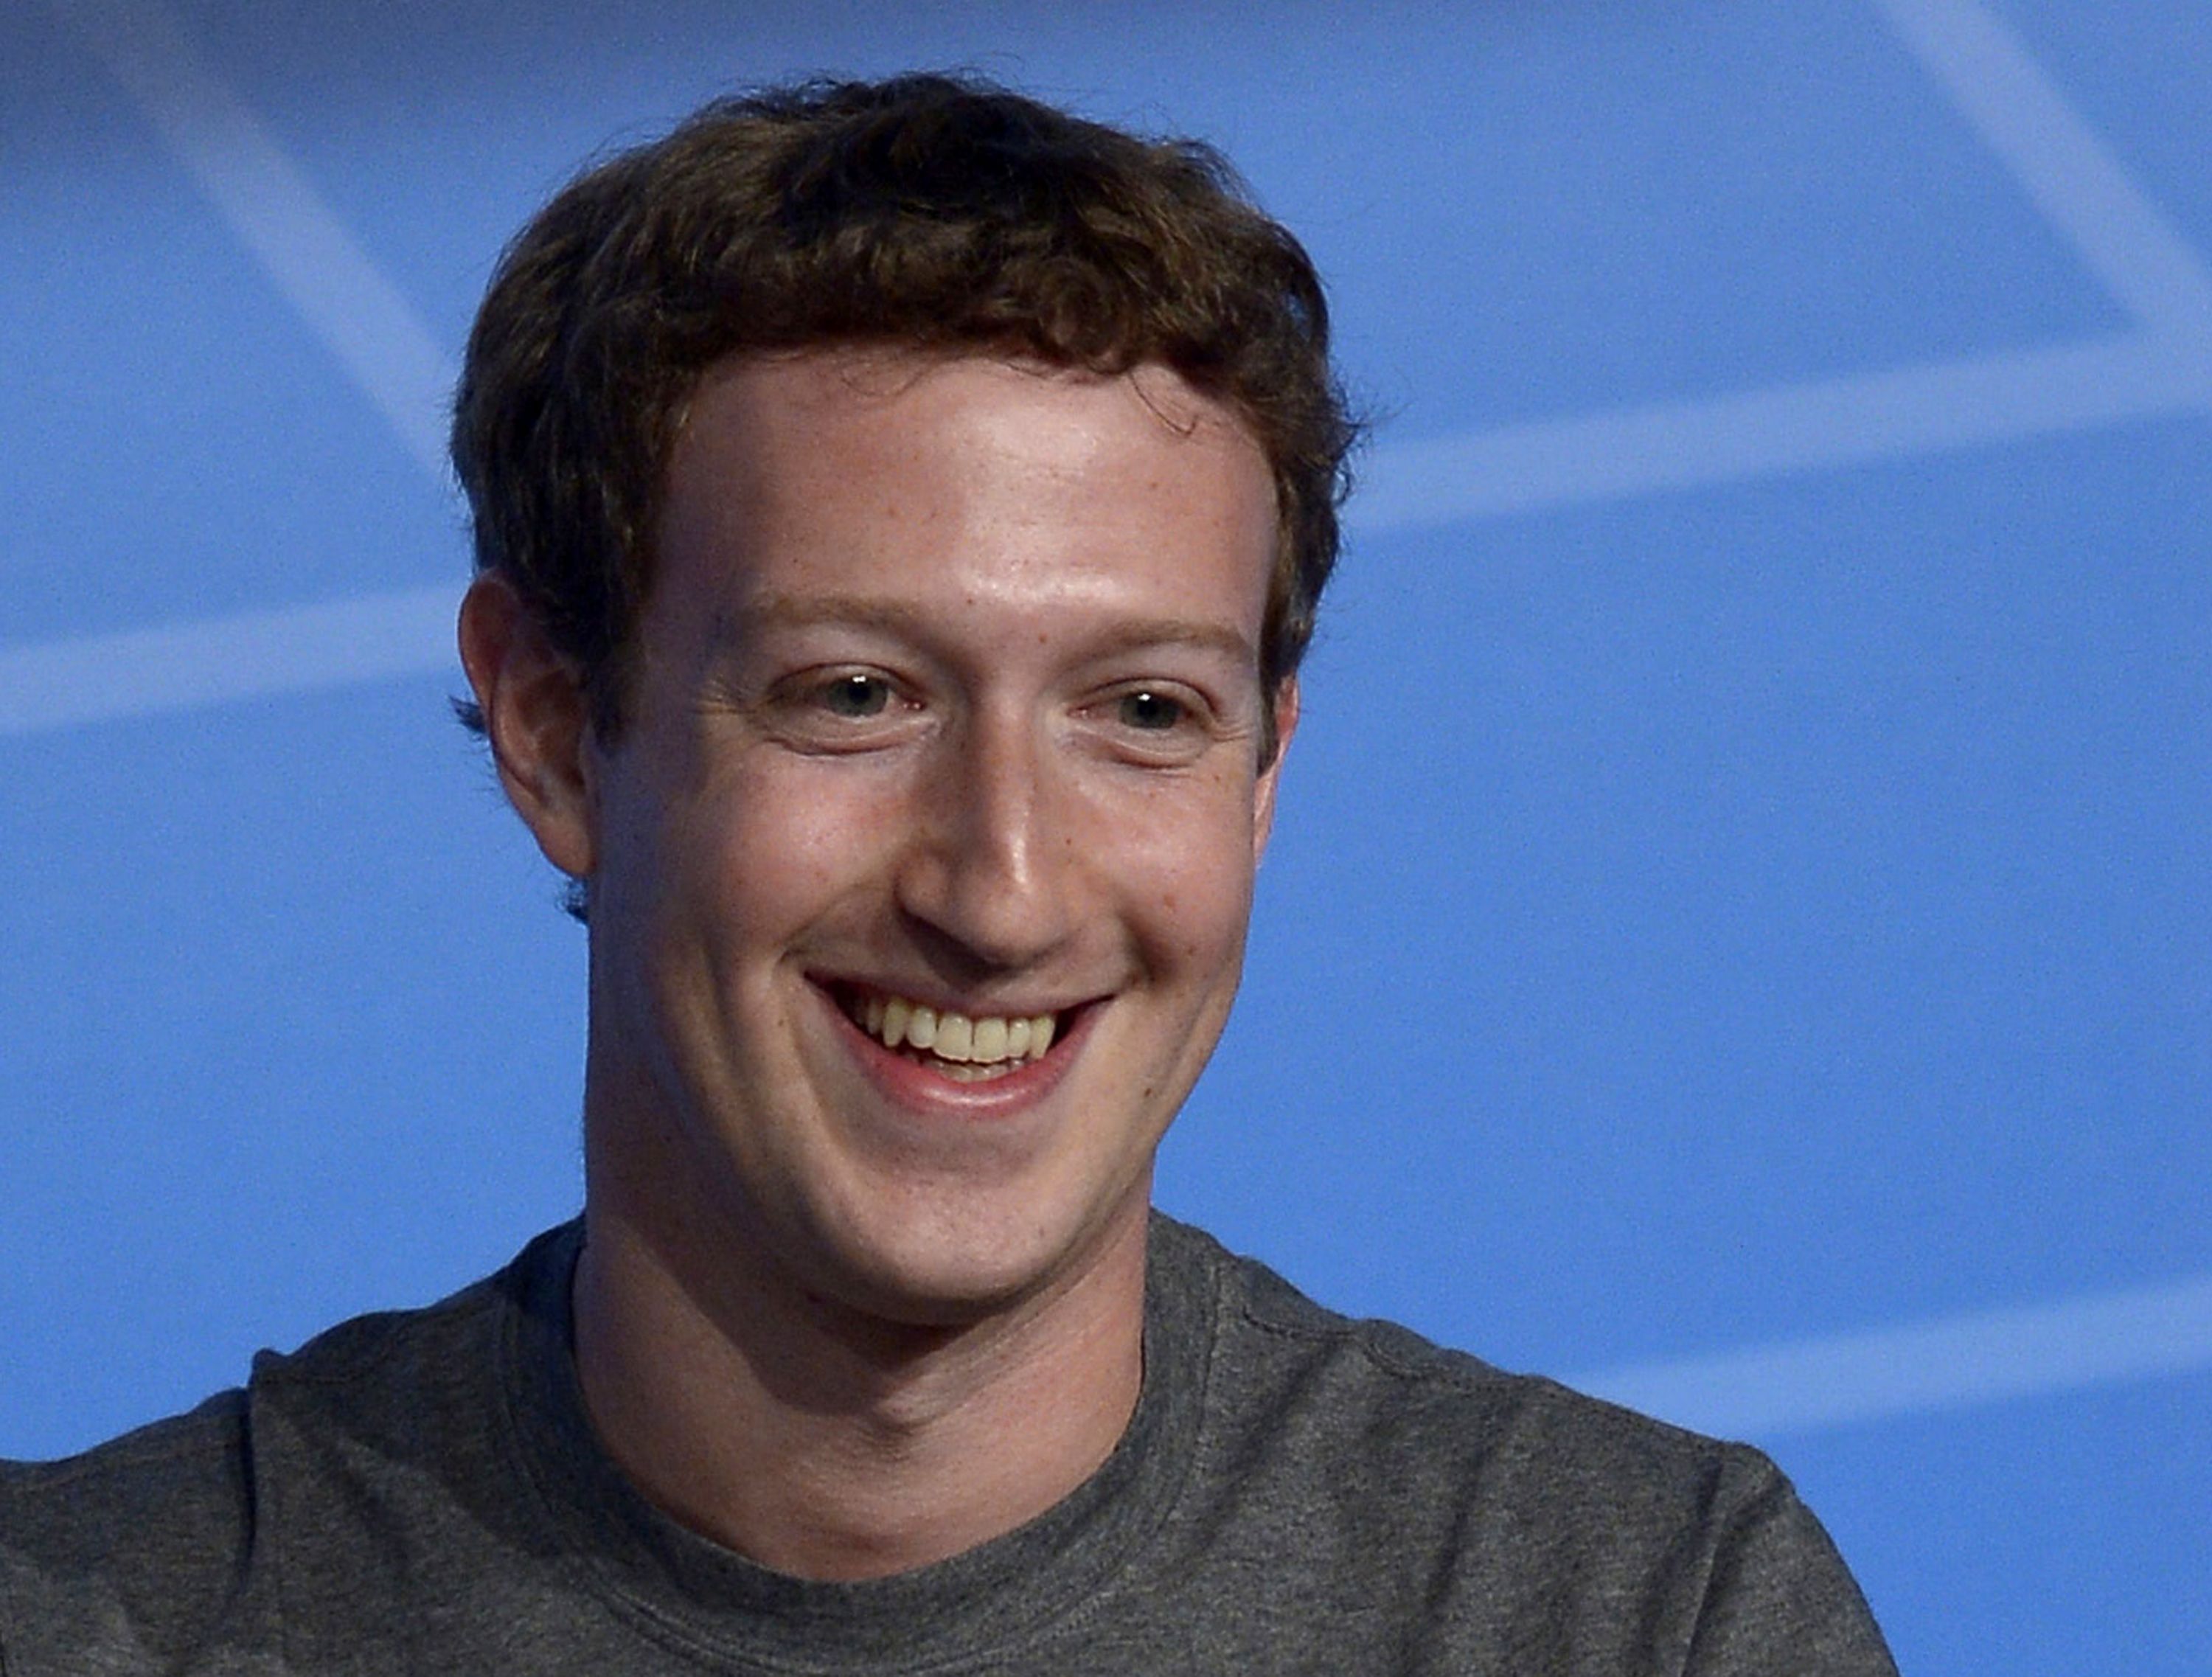 Mark Zuckerberg
Facebook CEO